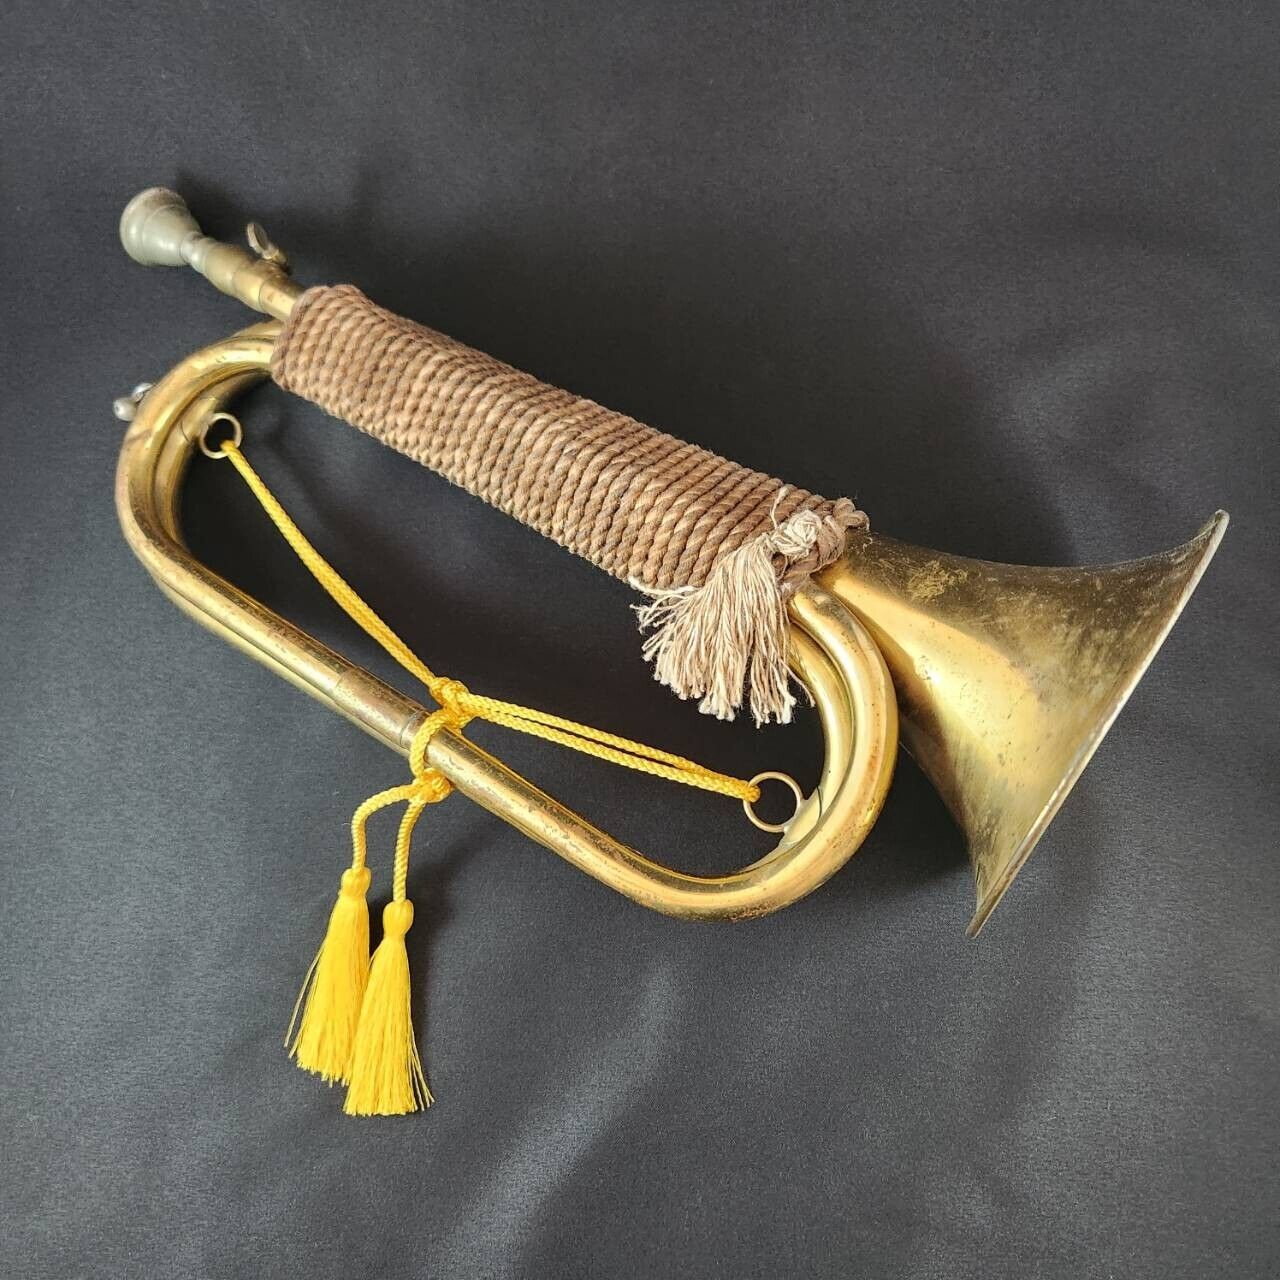 Japanese Imperial Army Trumpet bugle Length:34cm Vintage WWII WW2 original item